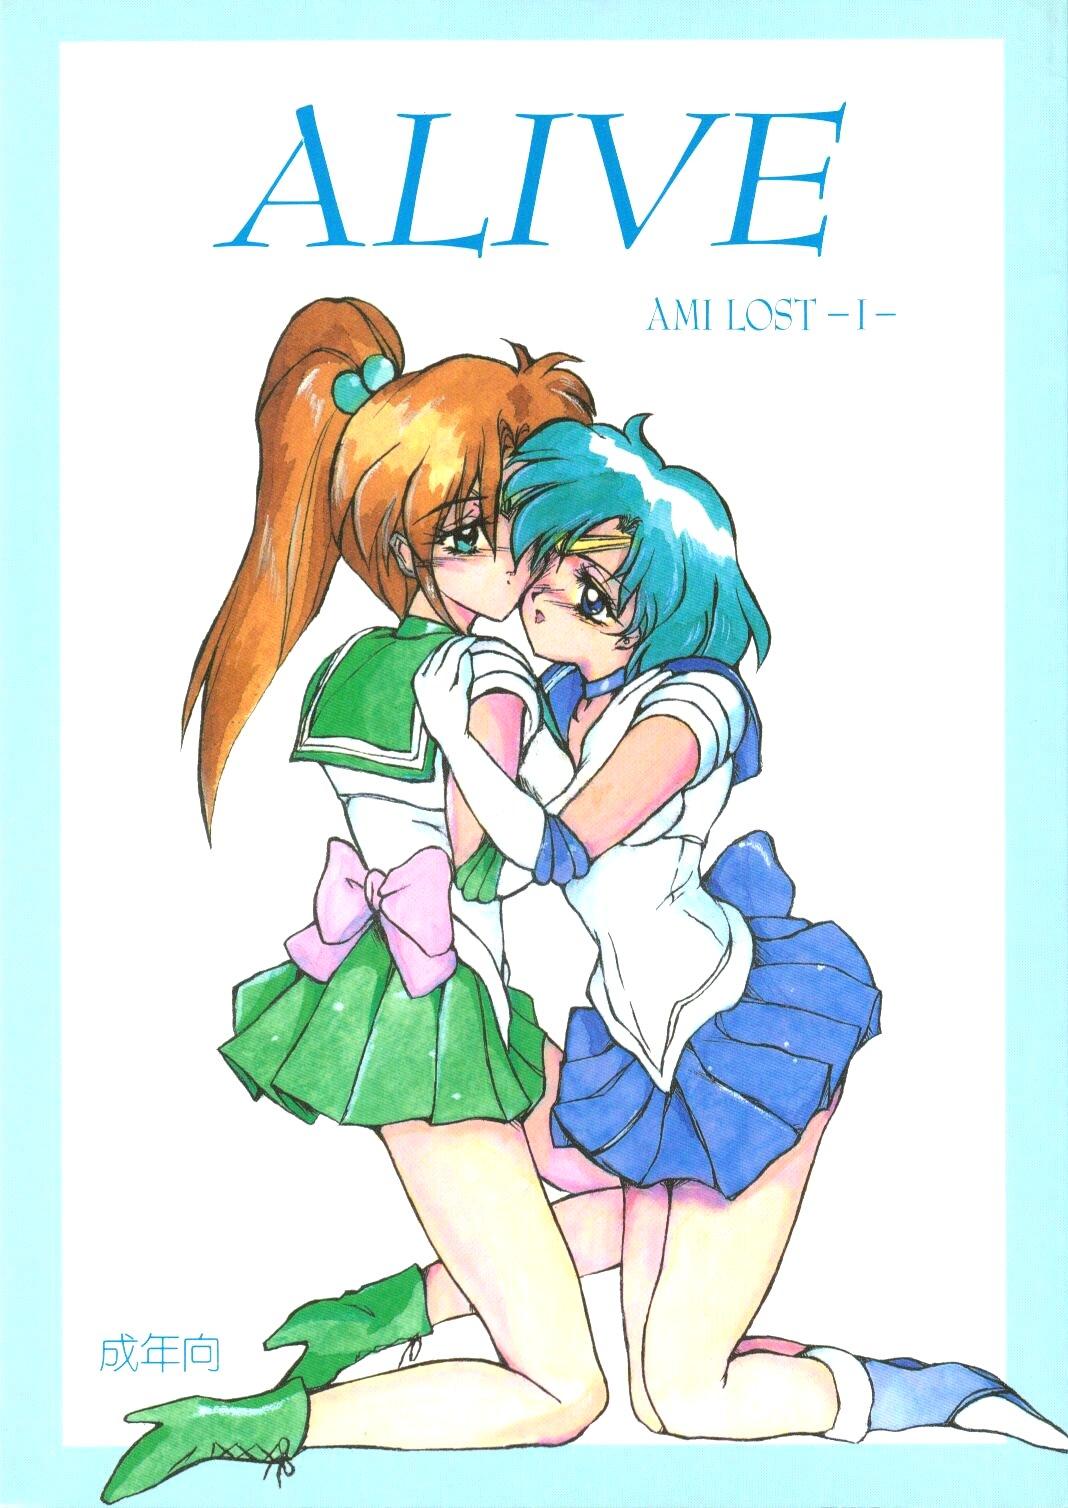 Cousin ALIVE AMI LOST - Sailor moon Best Blowjob - Picture 1